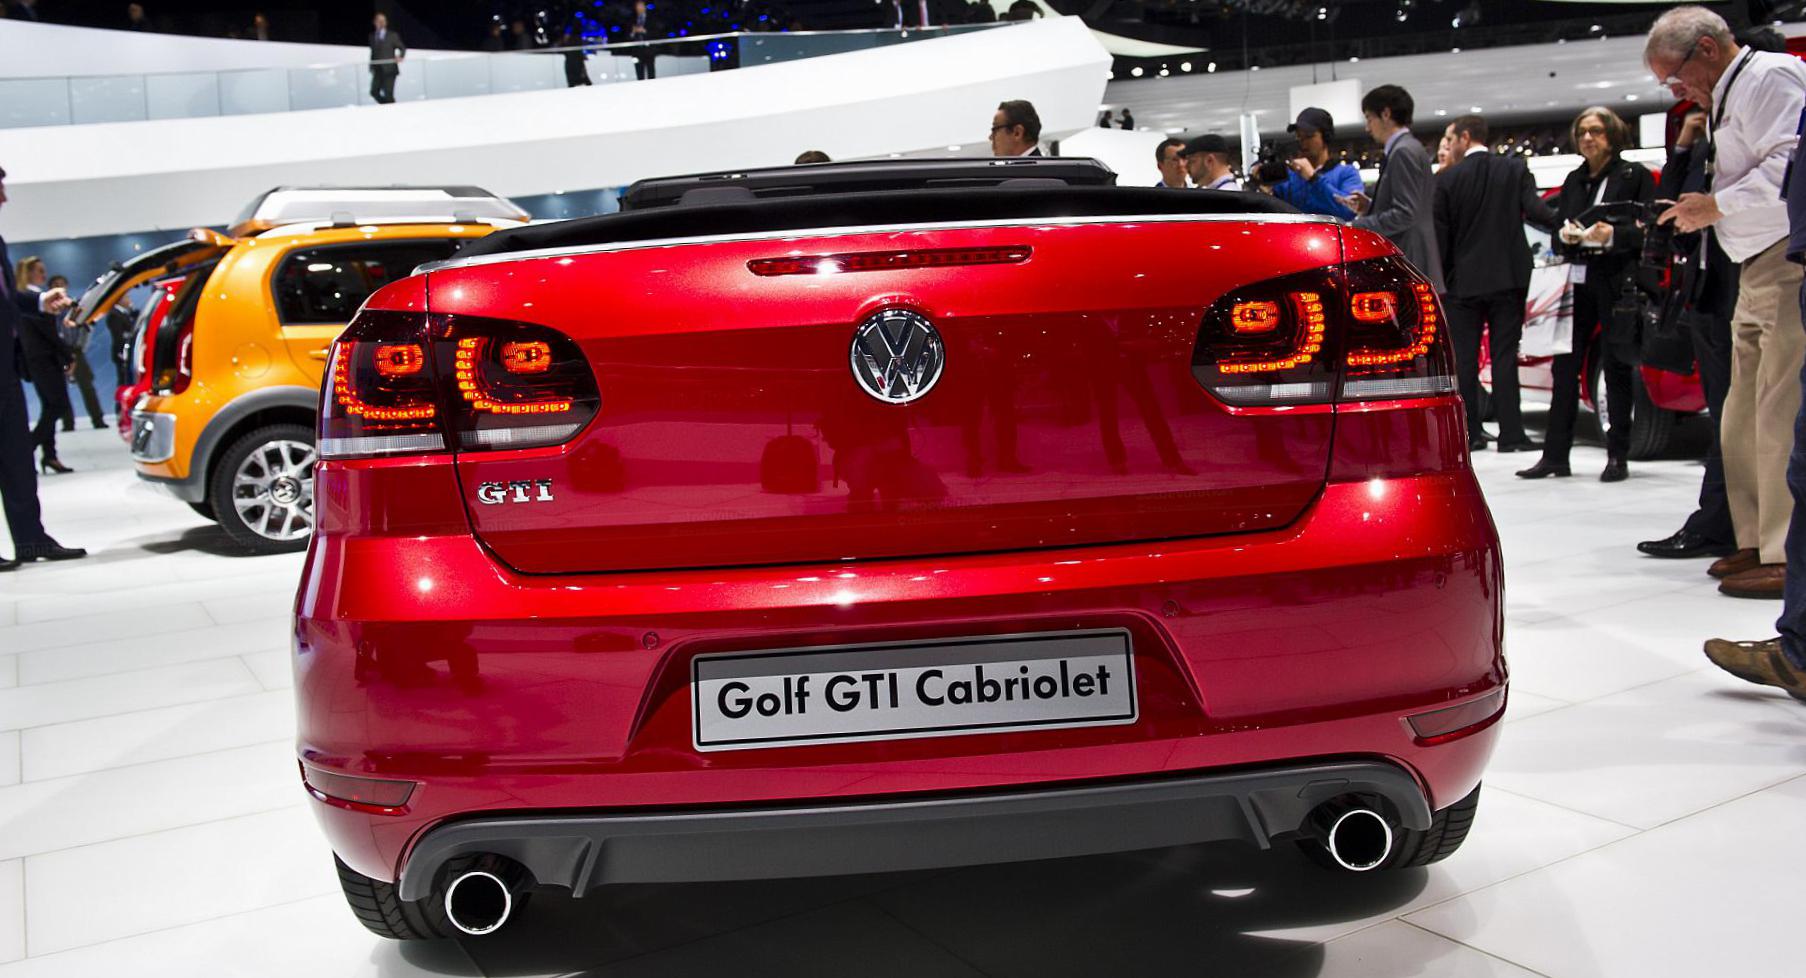 Golf GTI Cabriolet Volkswagen parts sedan